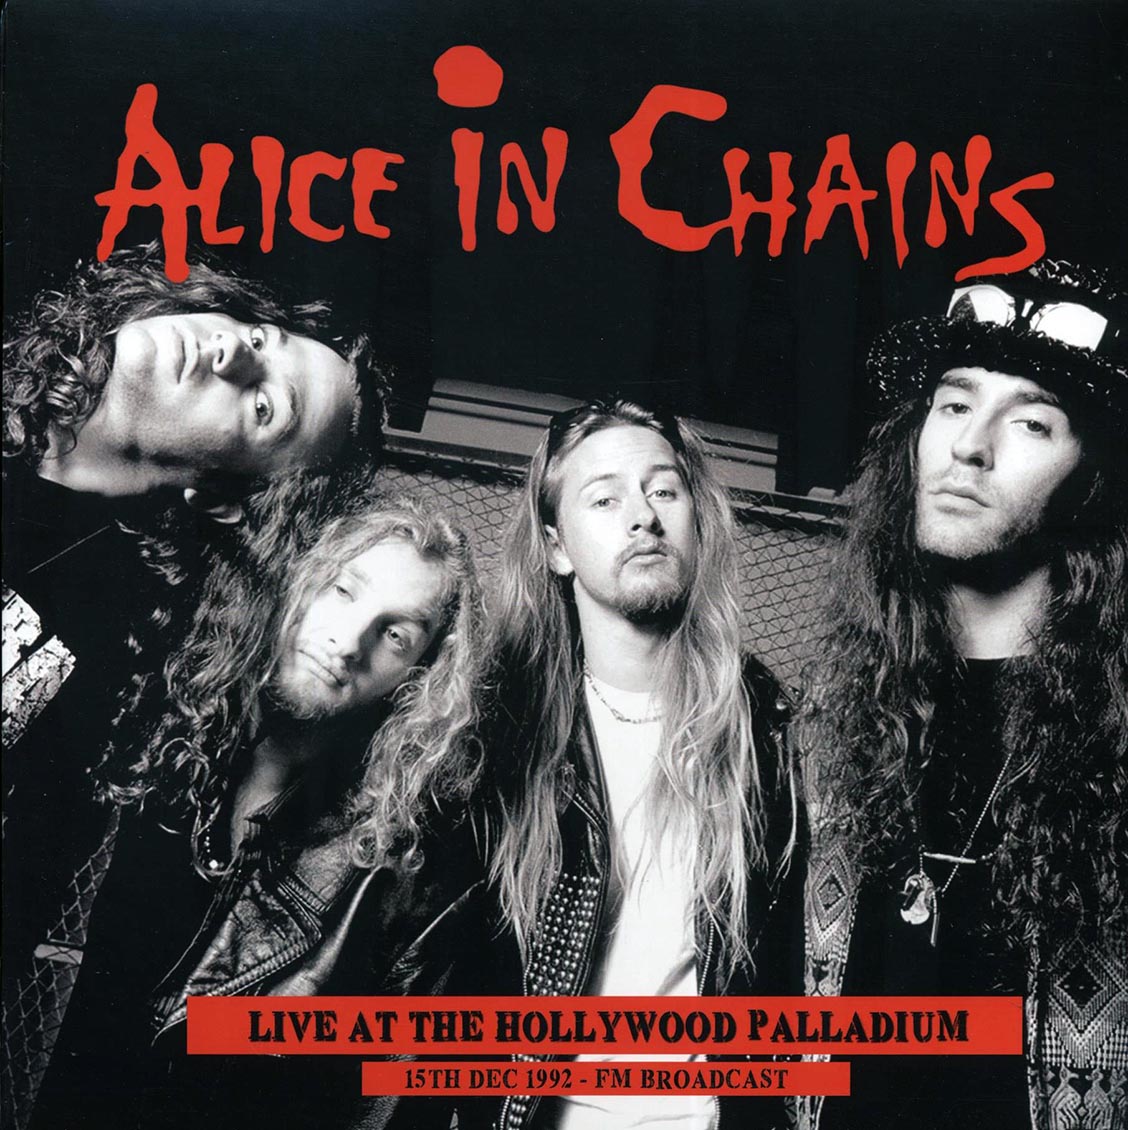 Alice In Chains - Live At The Hollywood Palladium: 15th Dec 1992 FM Broadcast (ltd. 500 copies made) - Vinyl LP